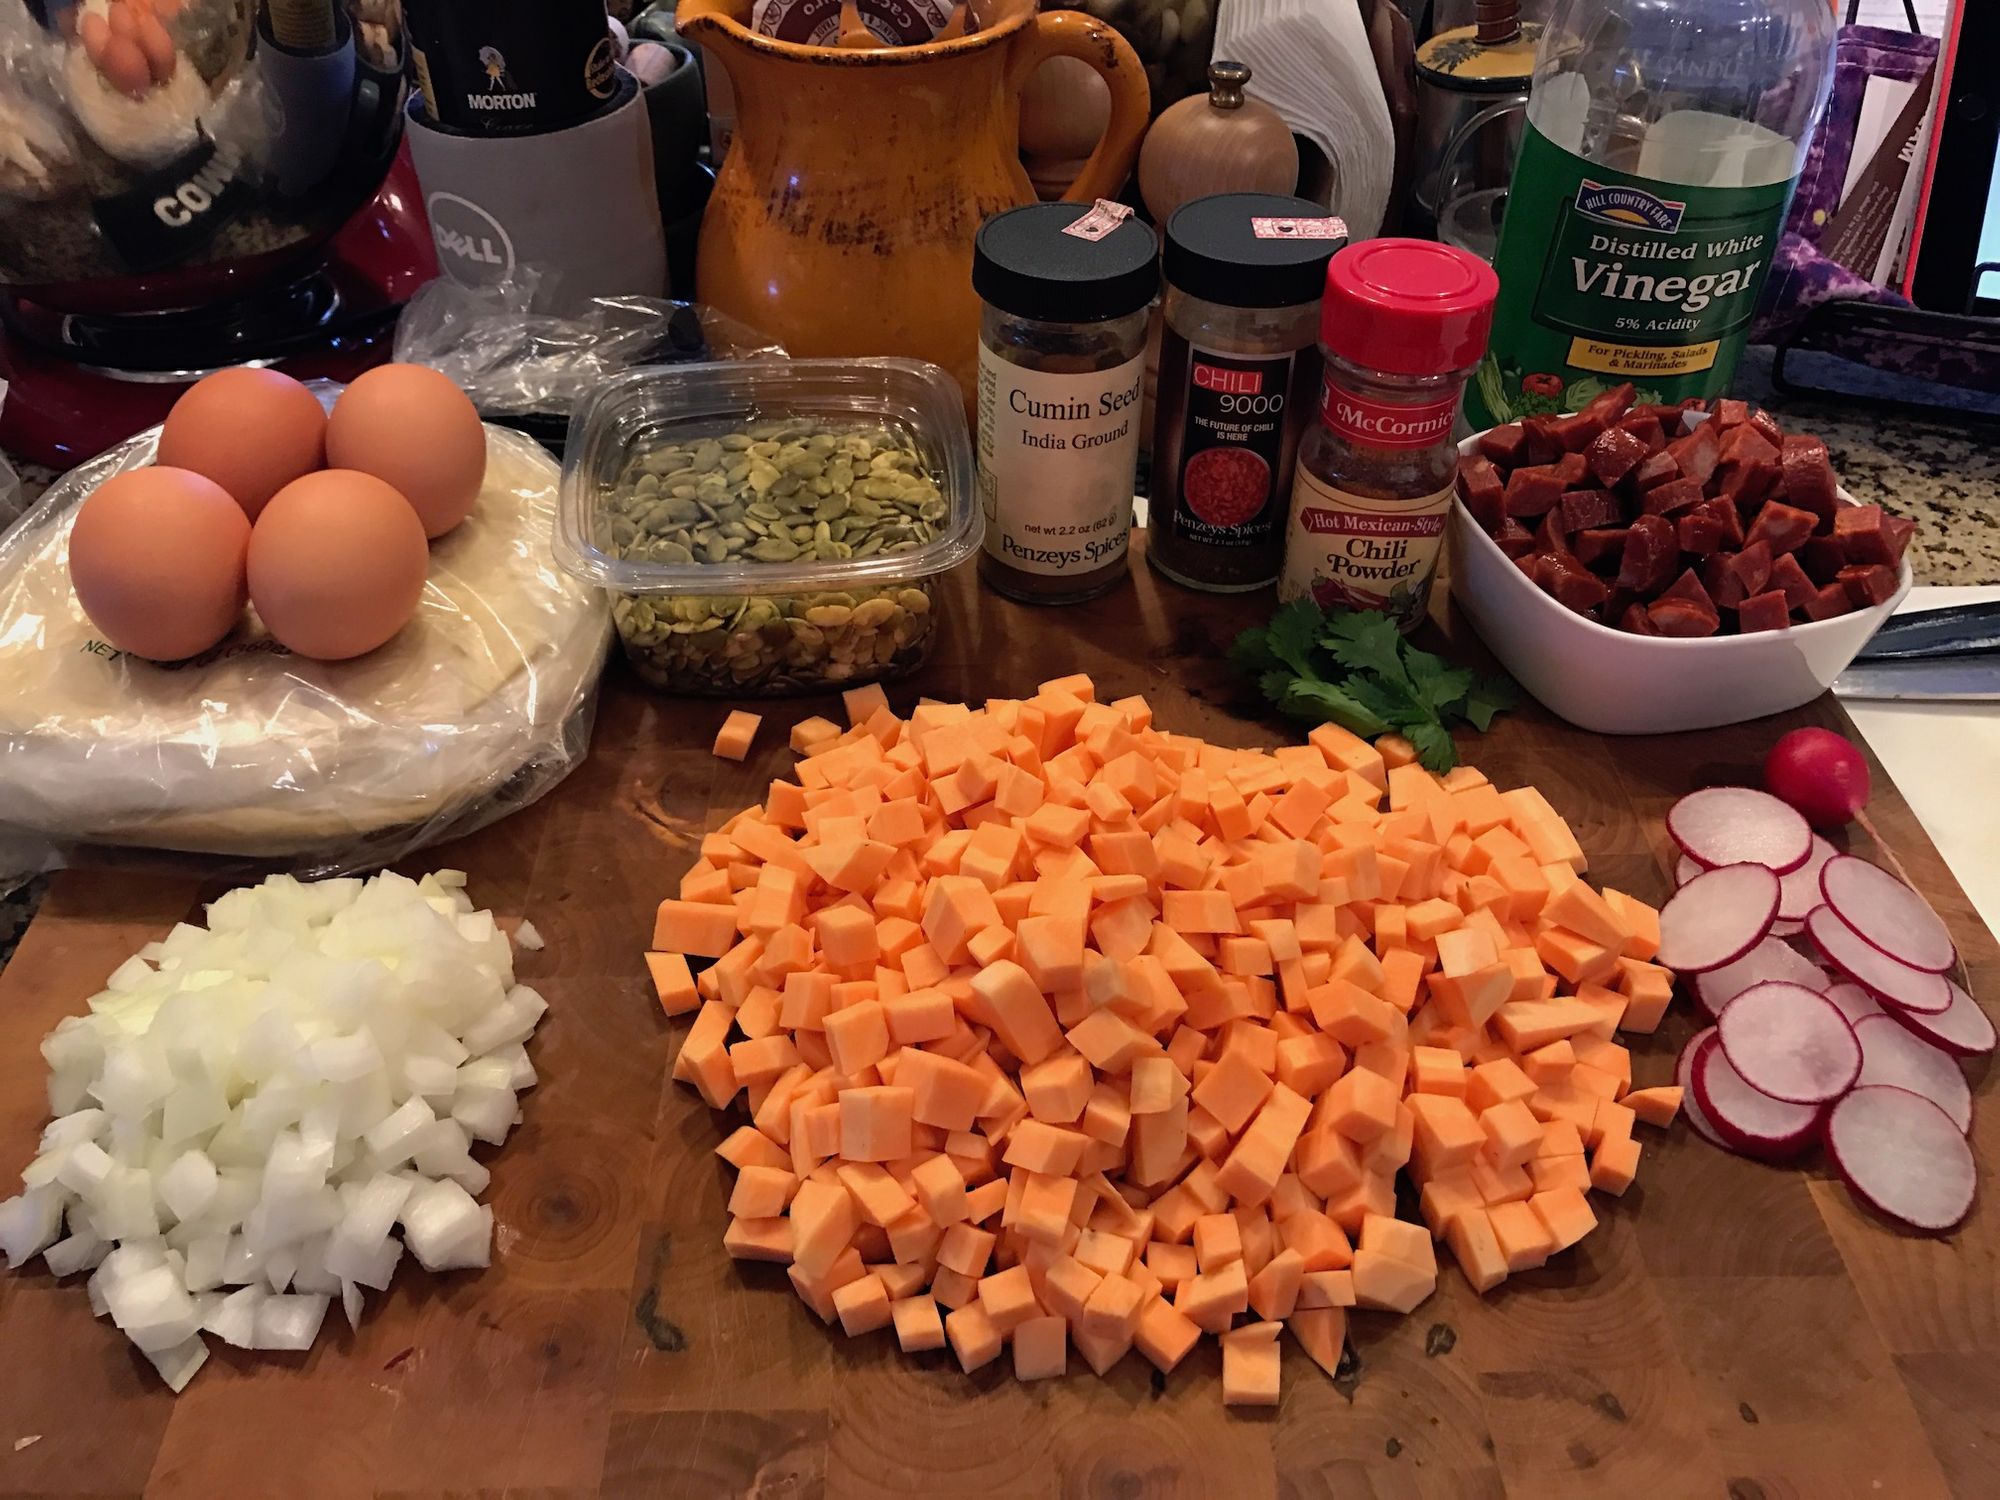 Fall Breakfast Tacos with Chorizo, Pumpkin Seed, and Sweet Potato